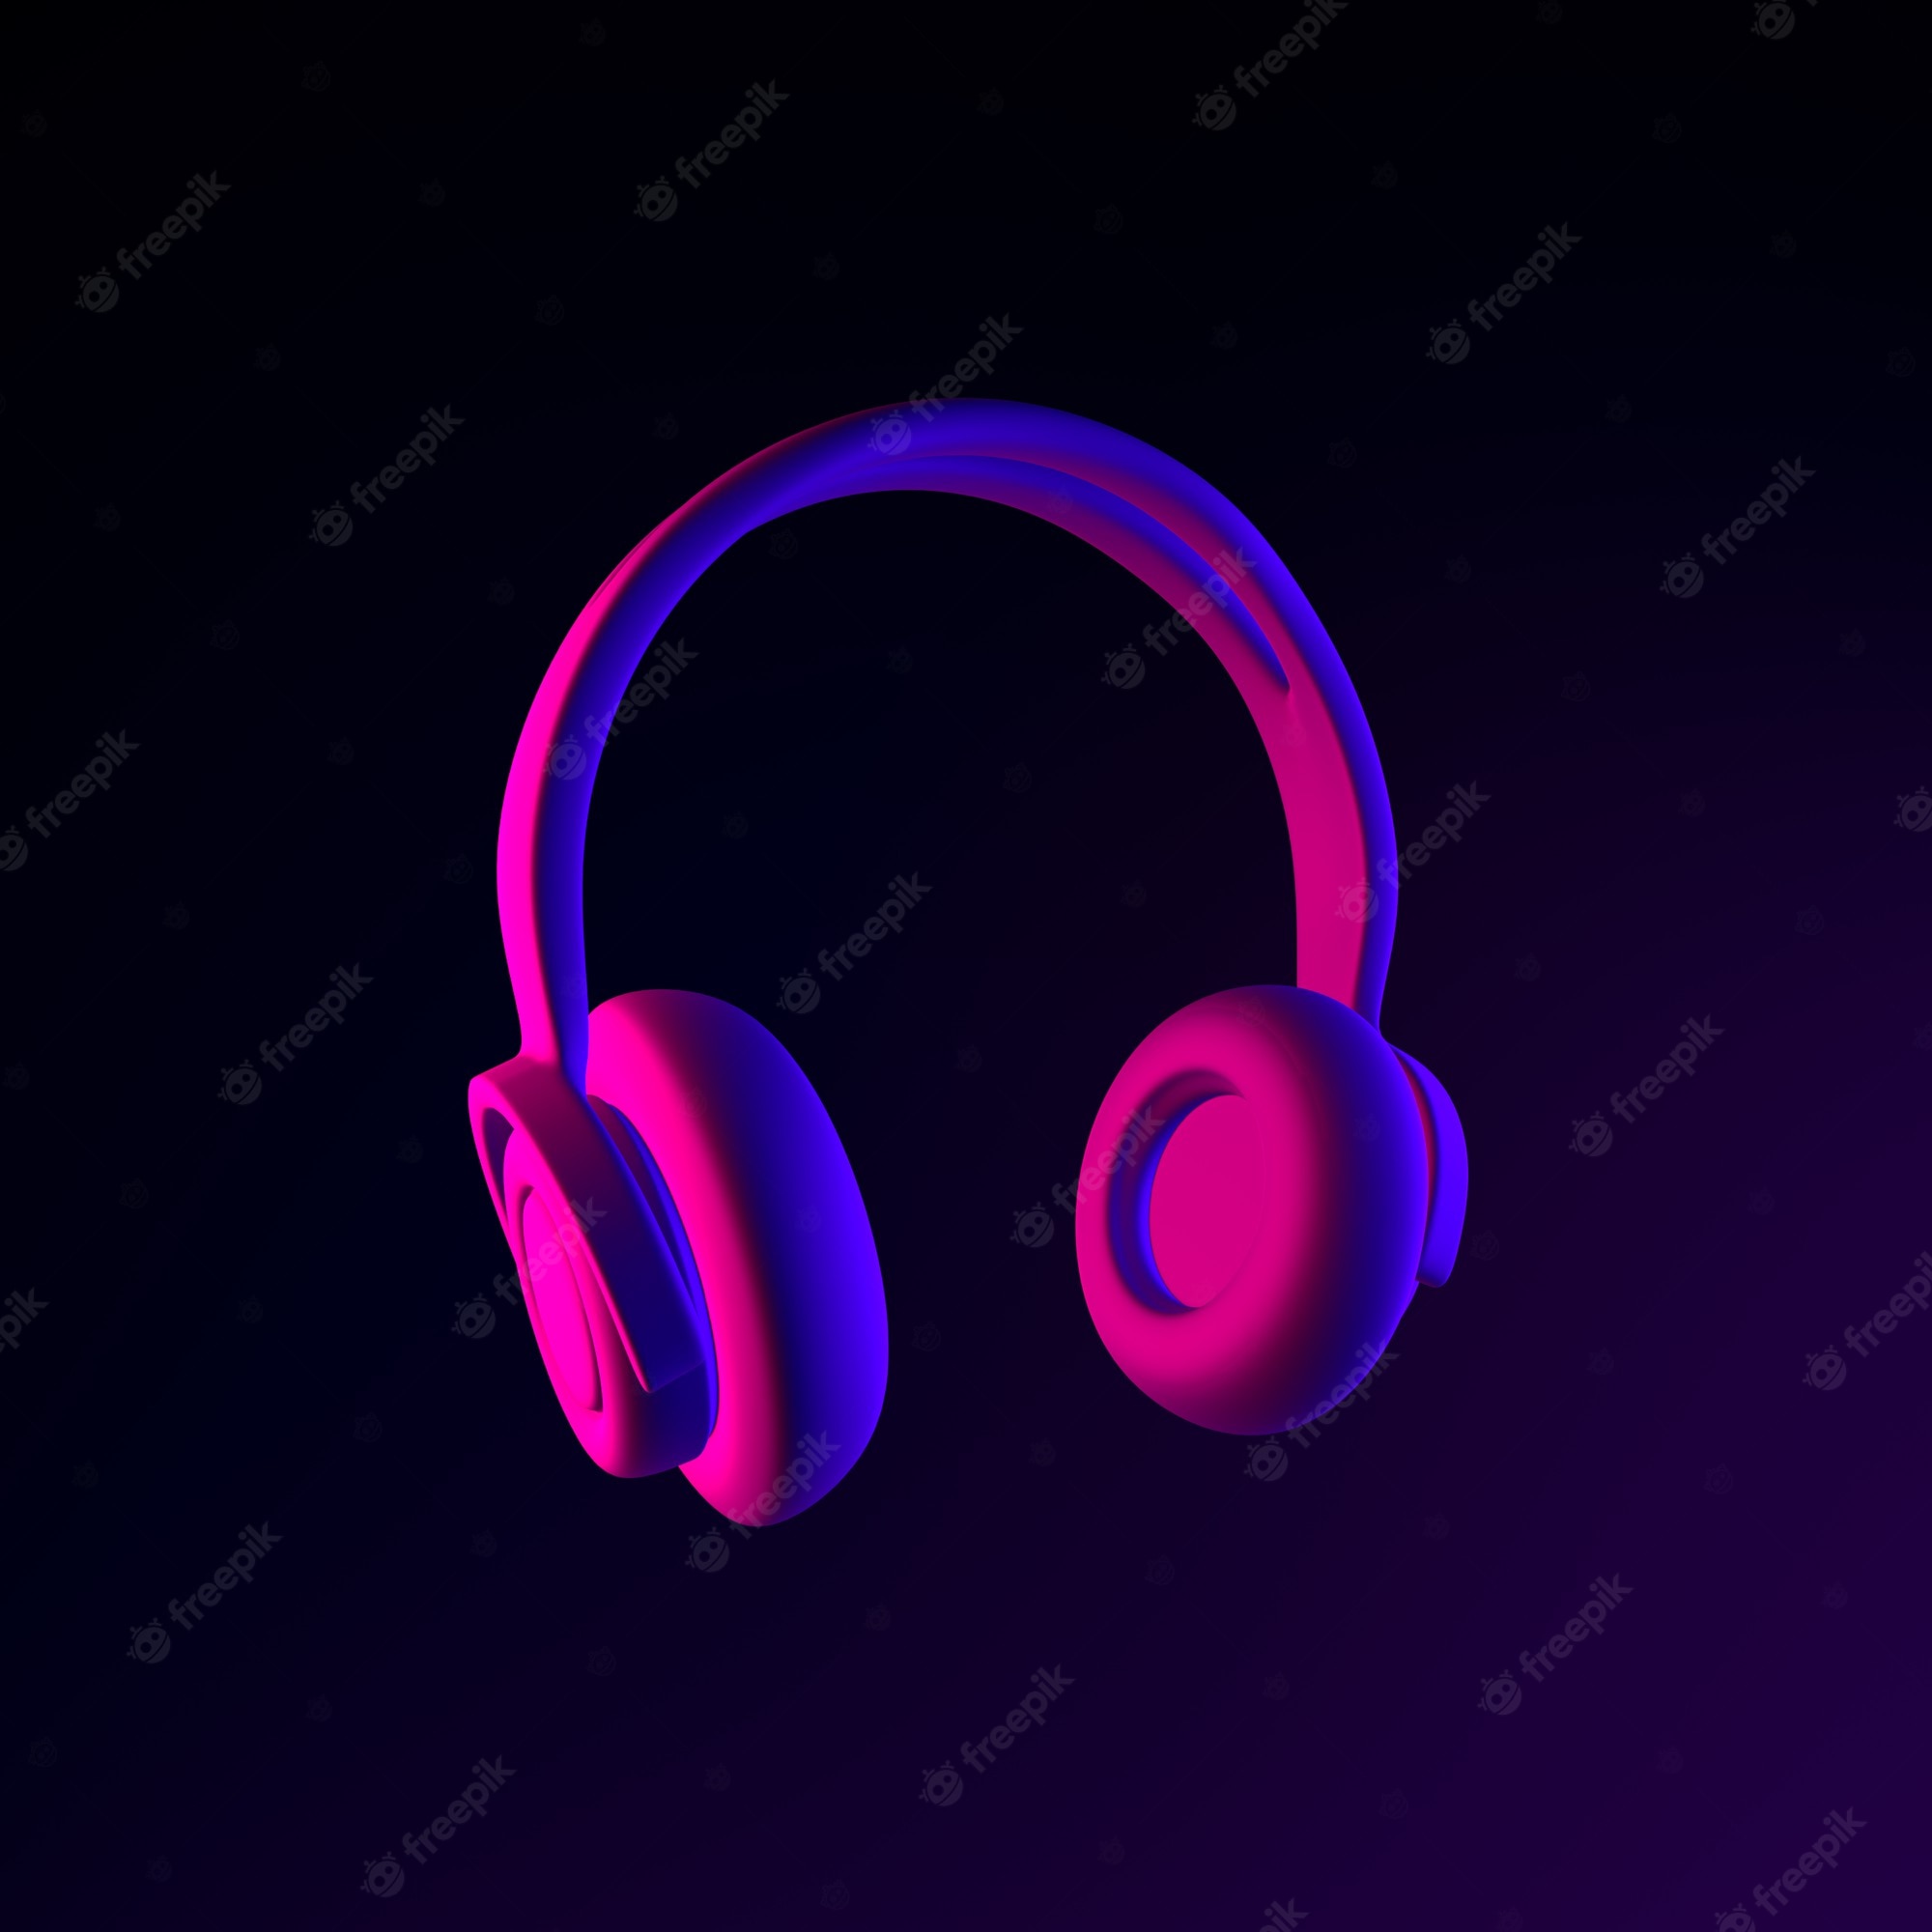 Premium Photo. Headphones neon icon. 3D rendering ui ux interface element. dark glowing symbol